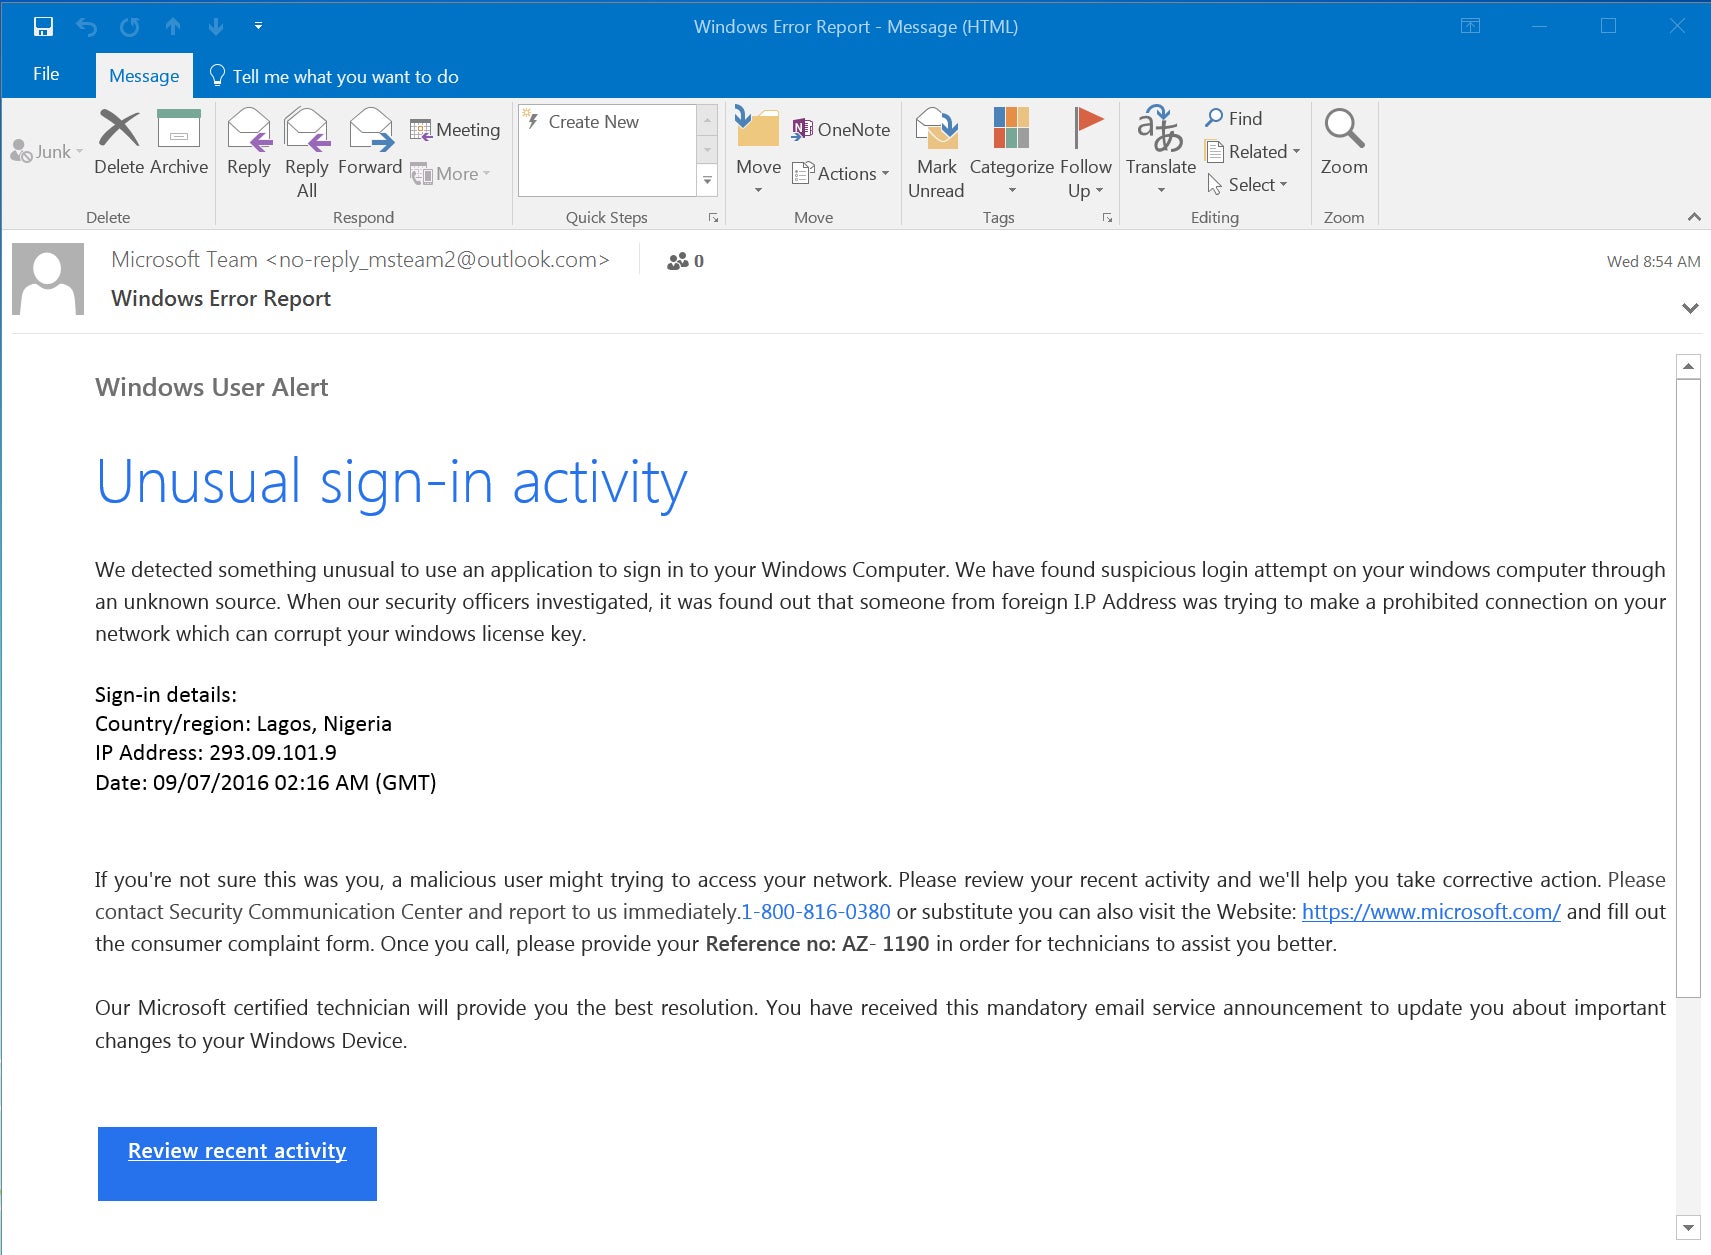 Microsoft Tech support scam